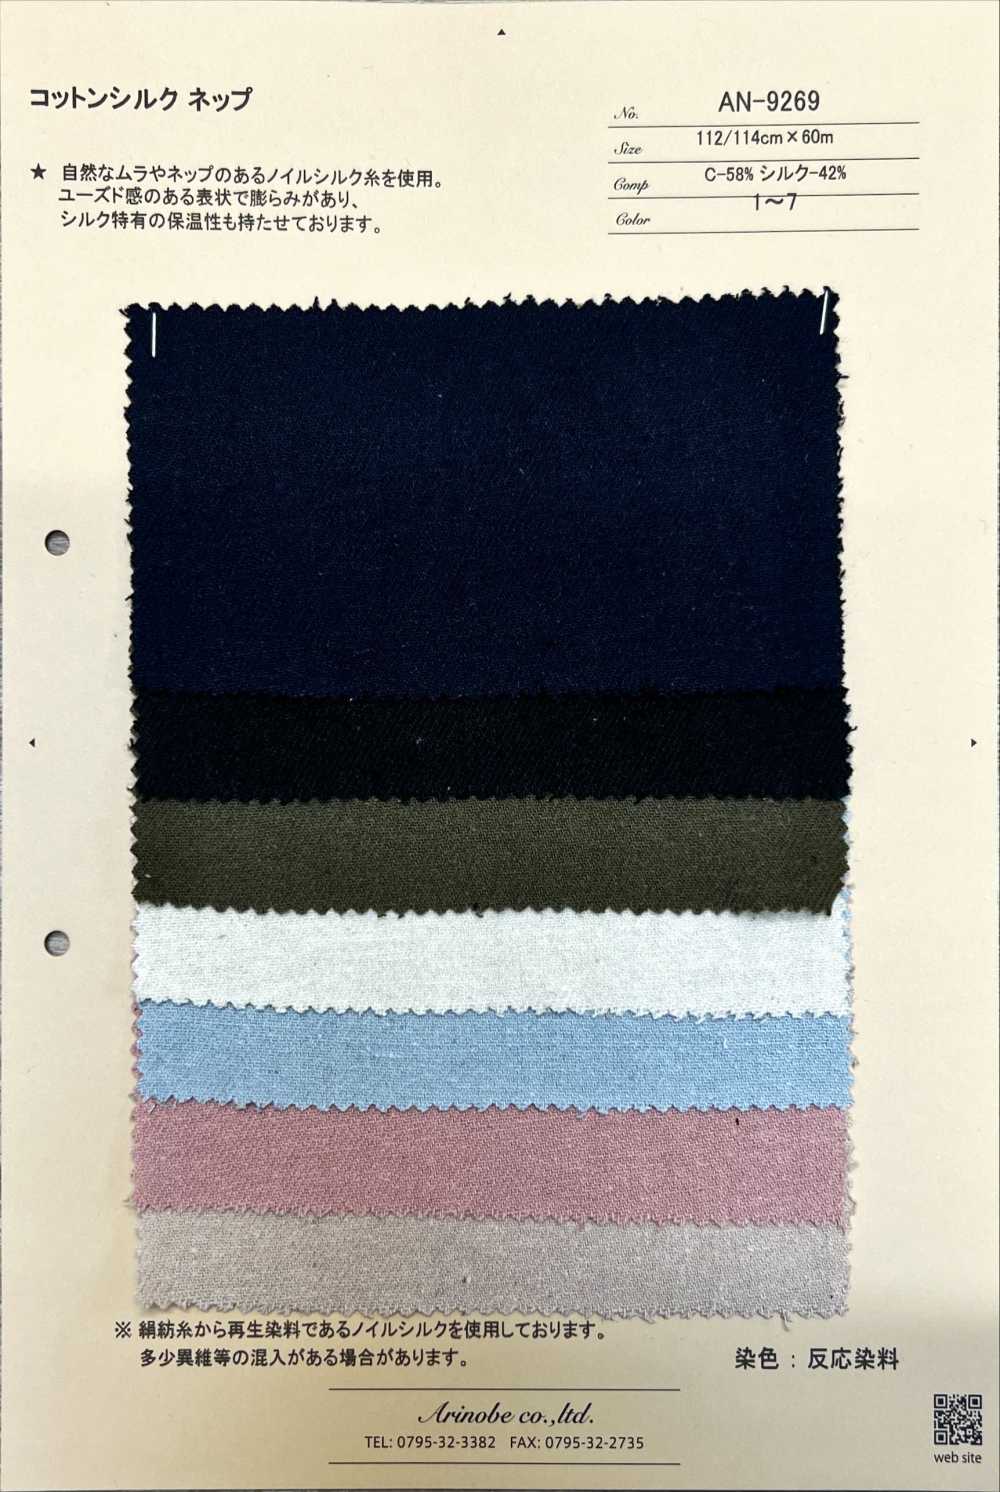 AN-9269 Coton Soie Nep[Fabrication De Textile] ARINOBE CO., LTD.